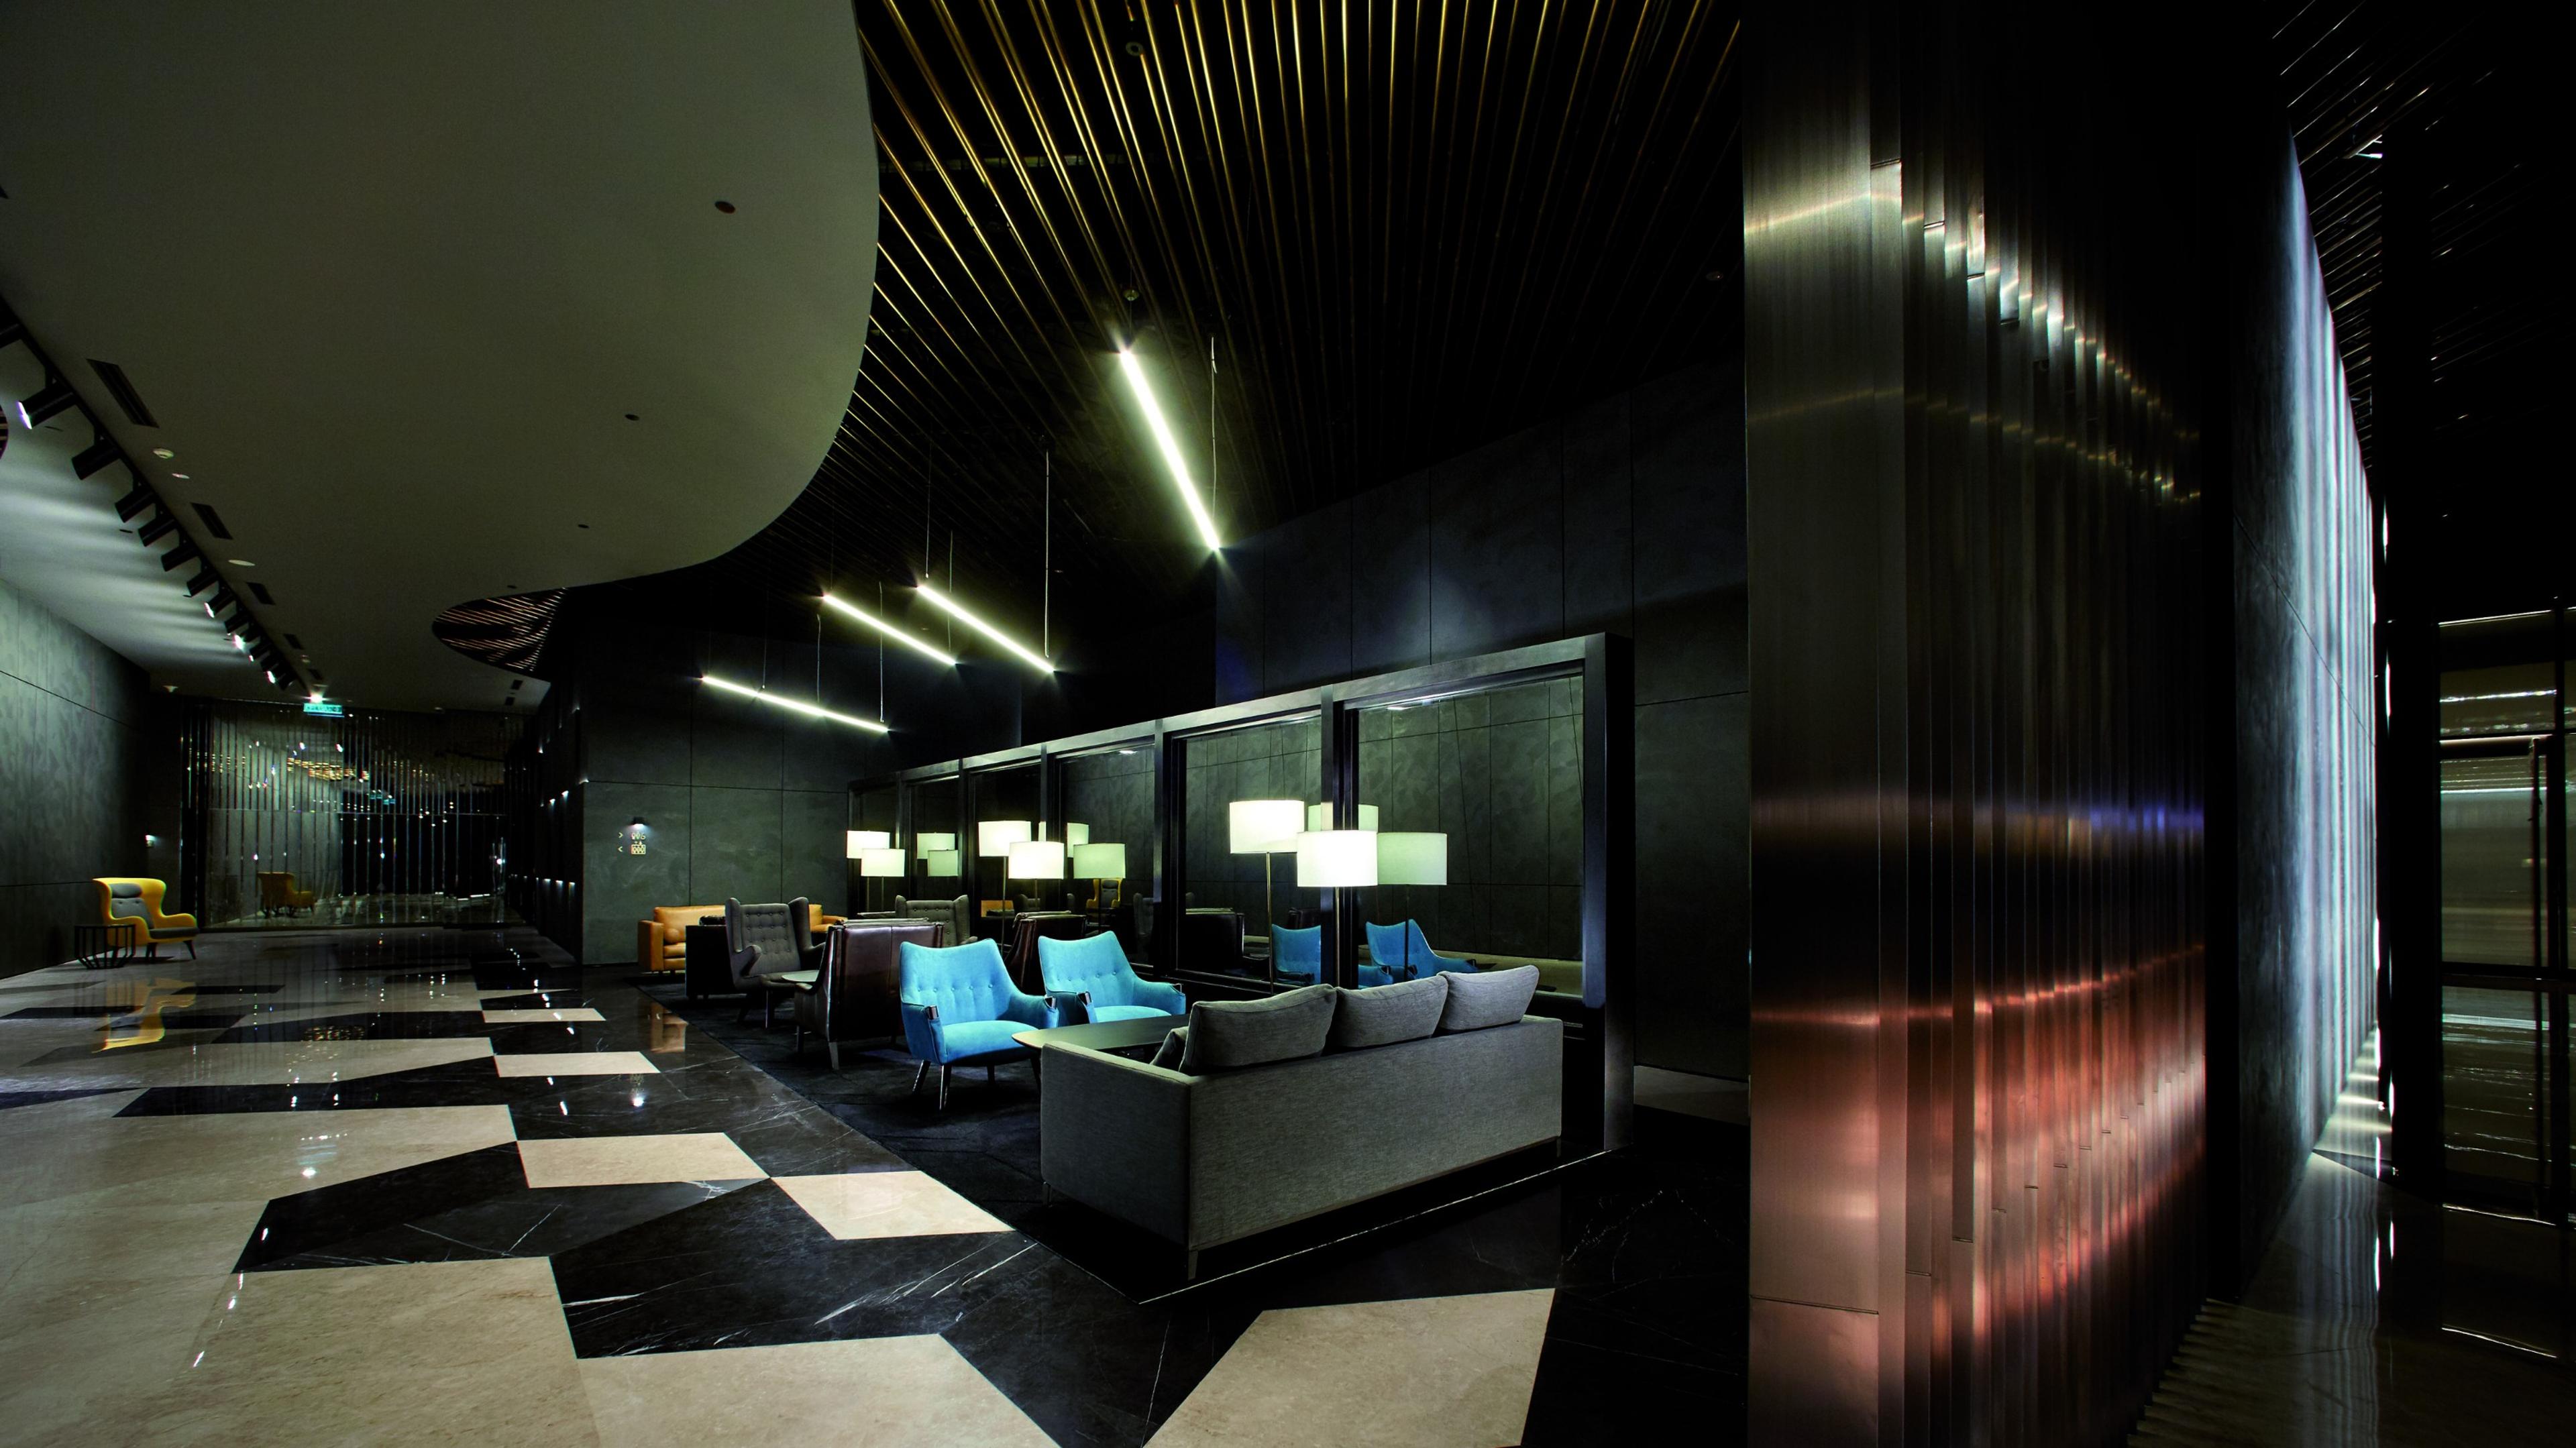 Crockfords Hotel, Resorts World Genting, Malaysia